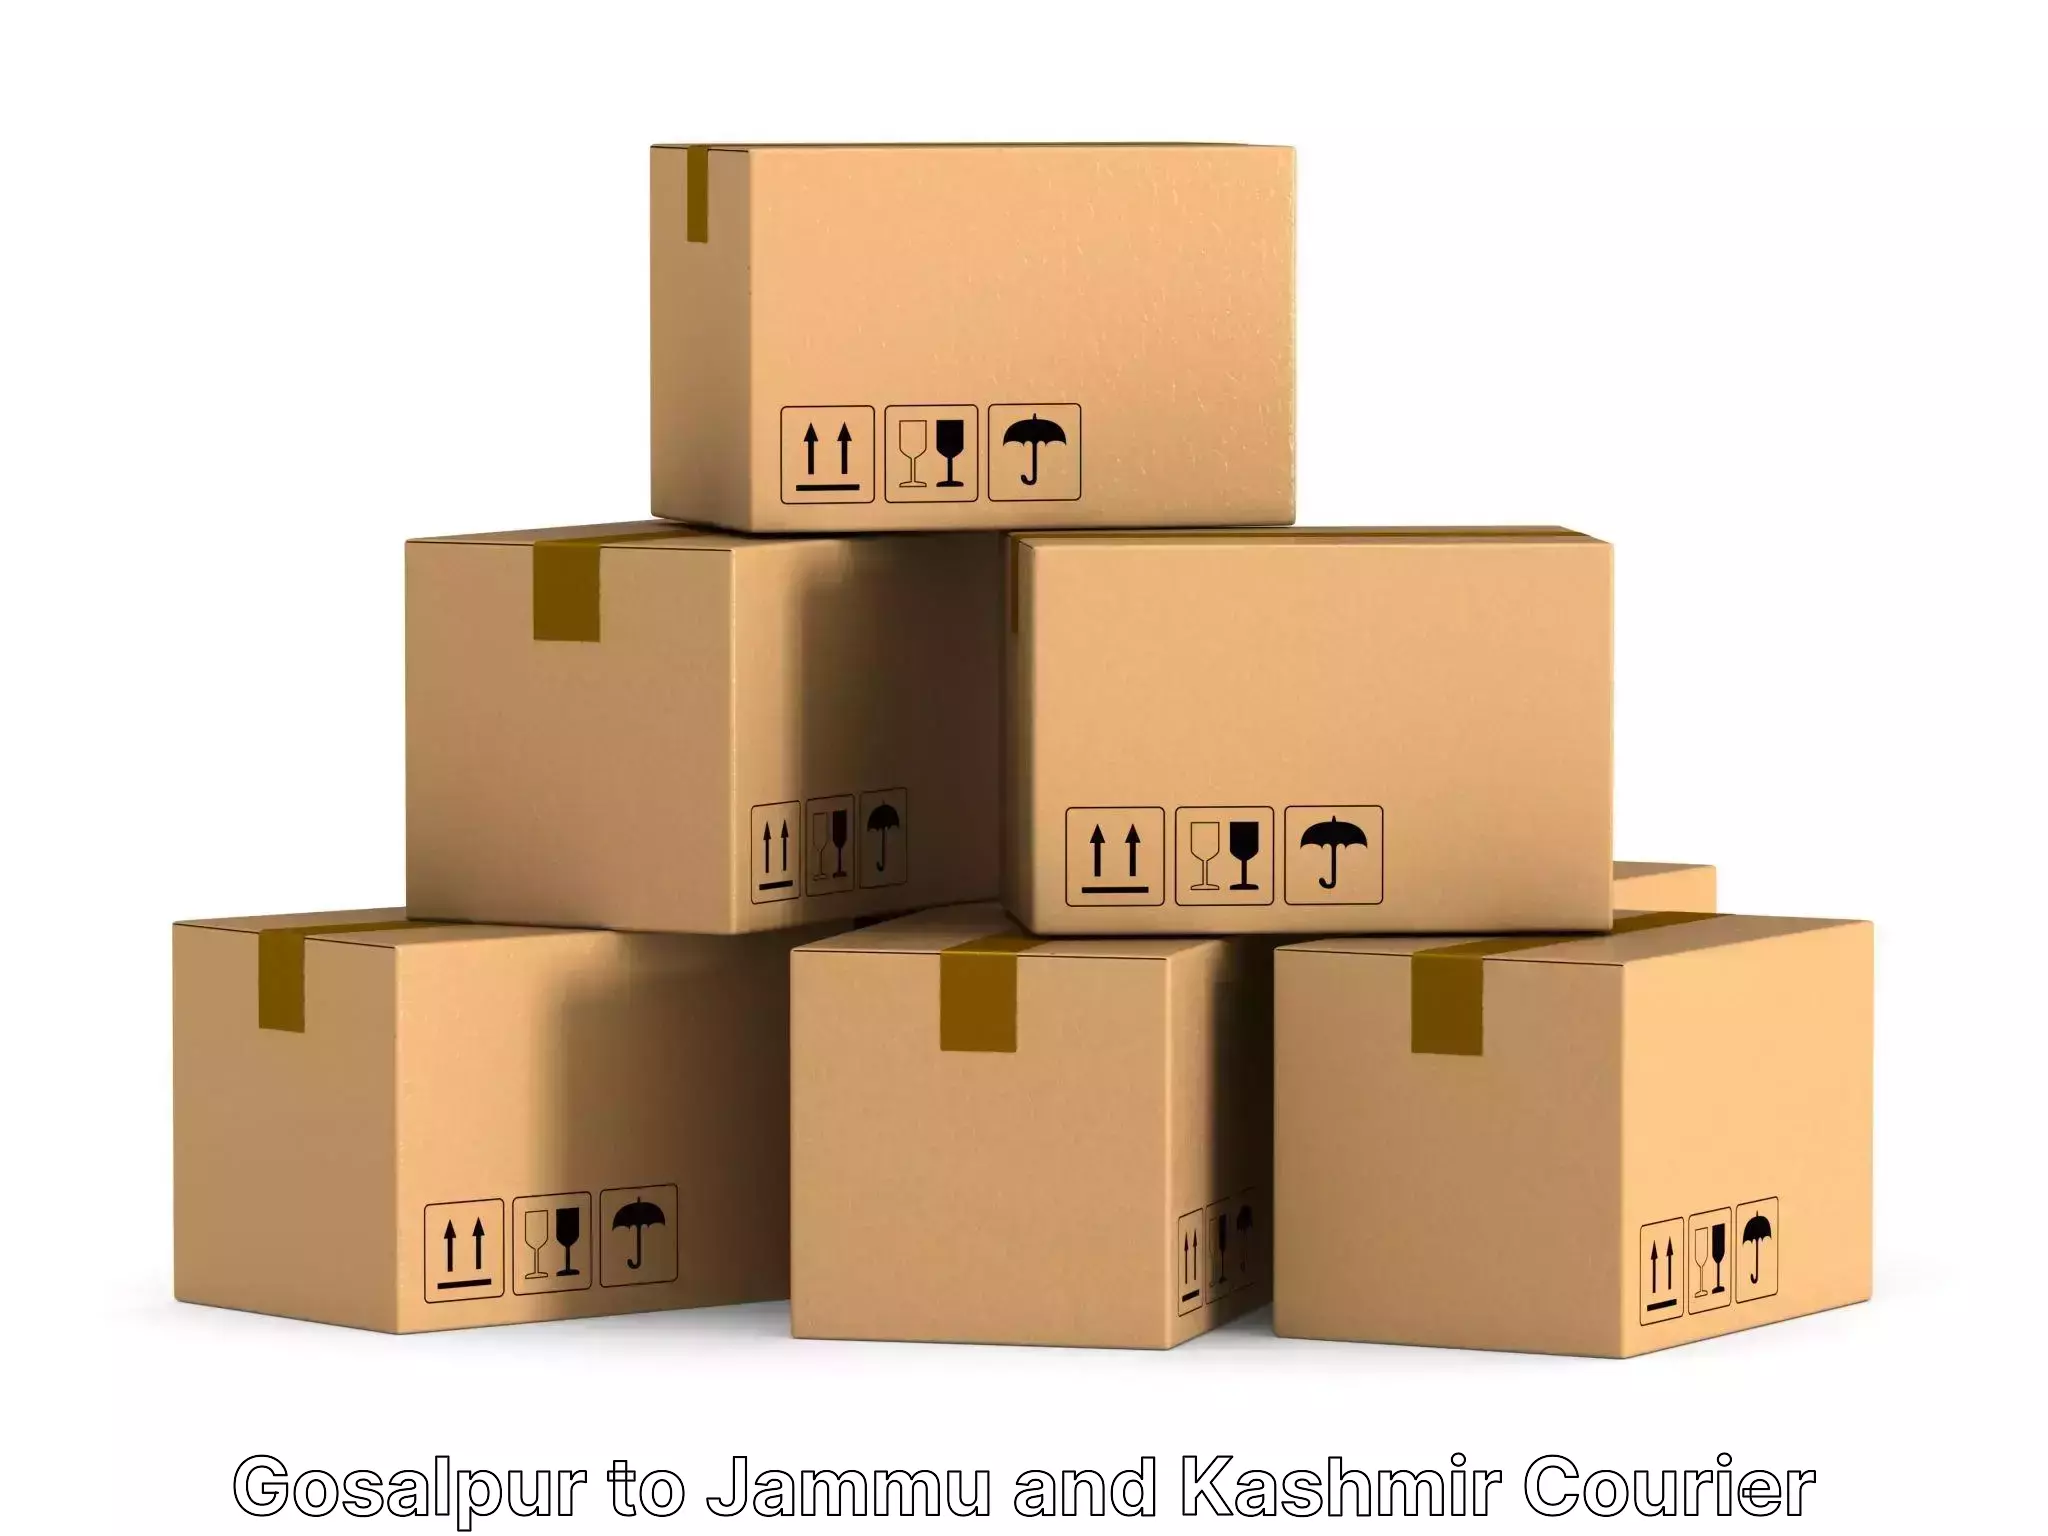 Professional home movers Gosalpur to Jammu and Kashmir